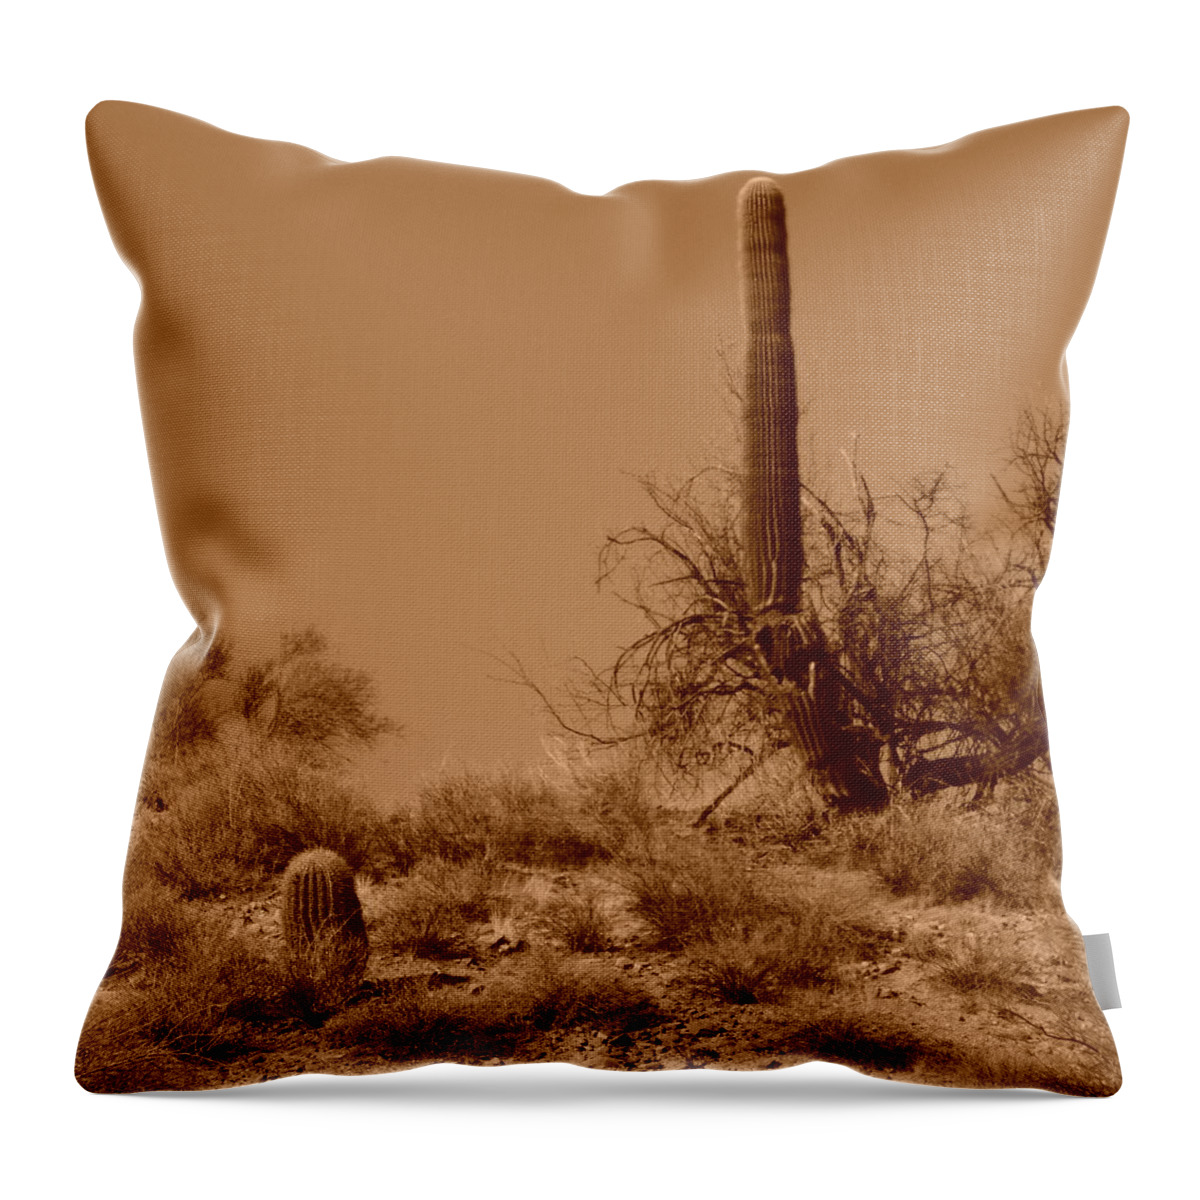 Ageless Sonoran Desert Throw Pillow featuring the photograph The Ageless Sonoran Desert by Bill Tomsa